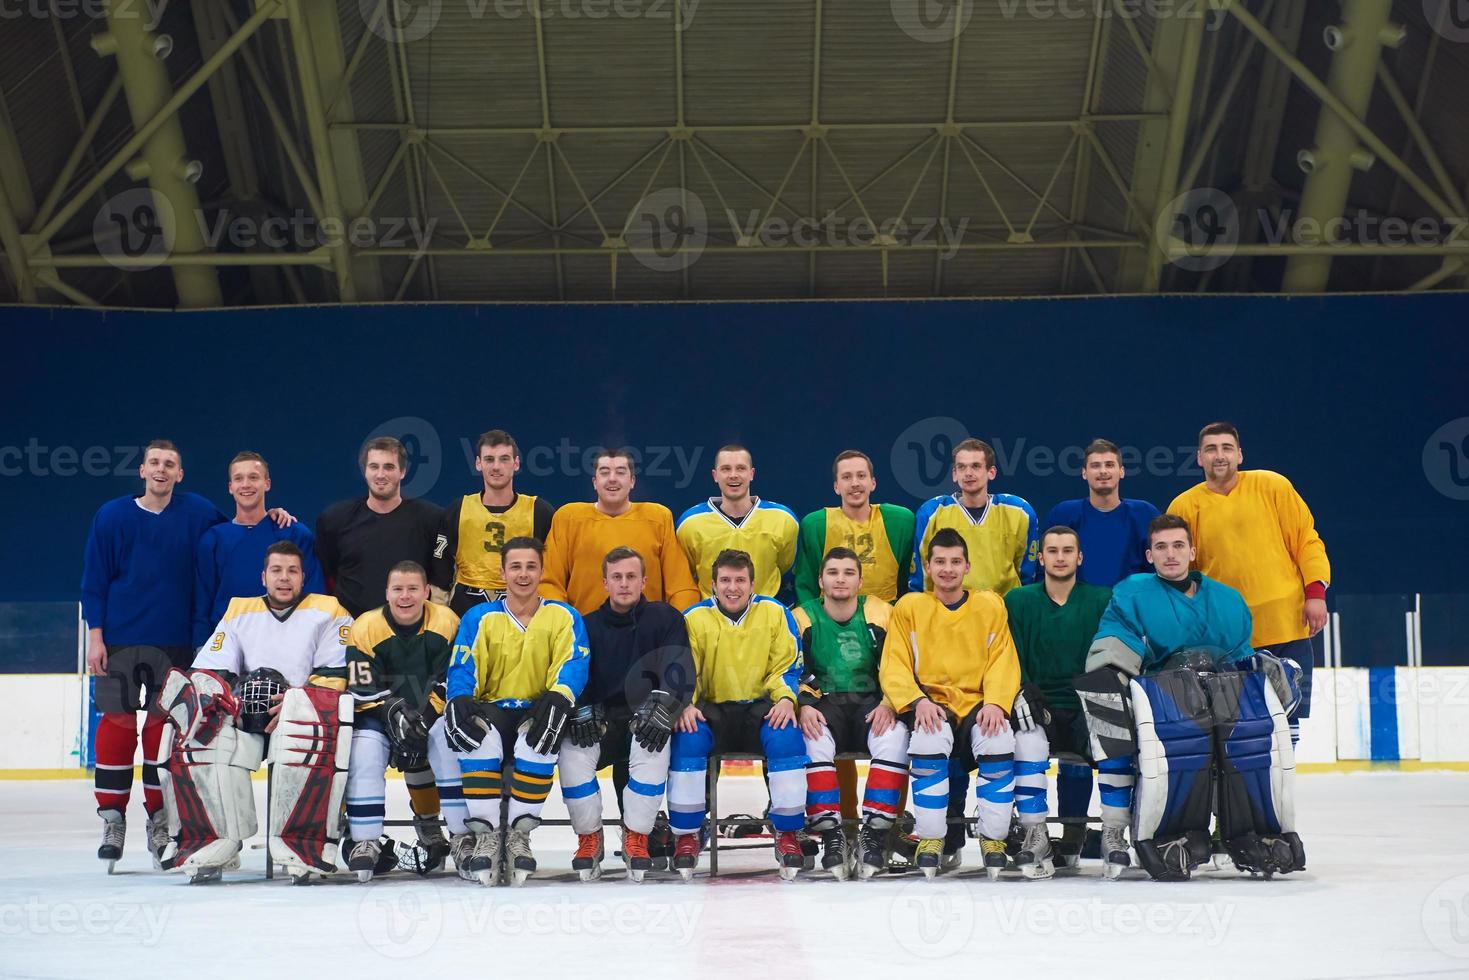 ijs hockey spelers team portret foto